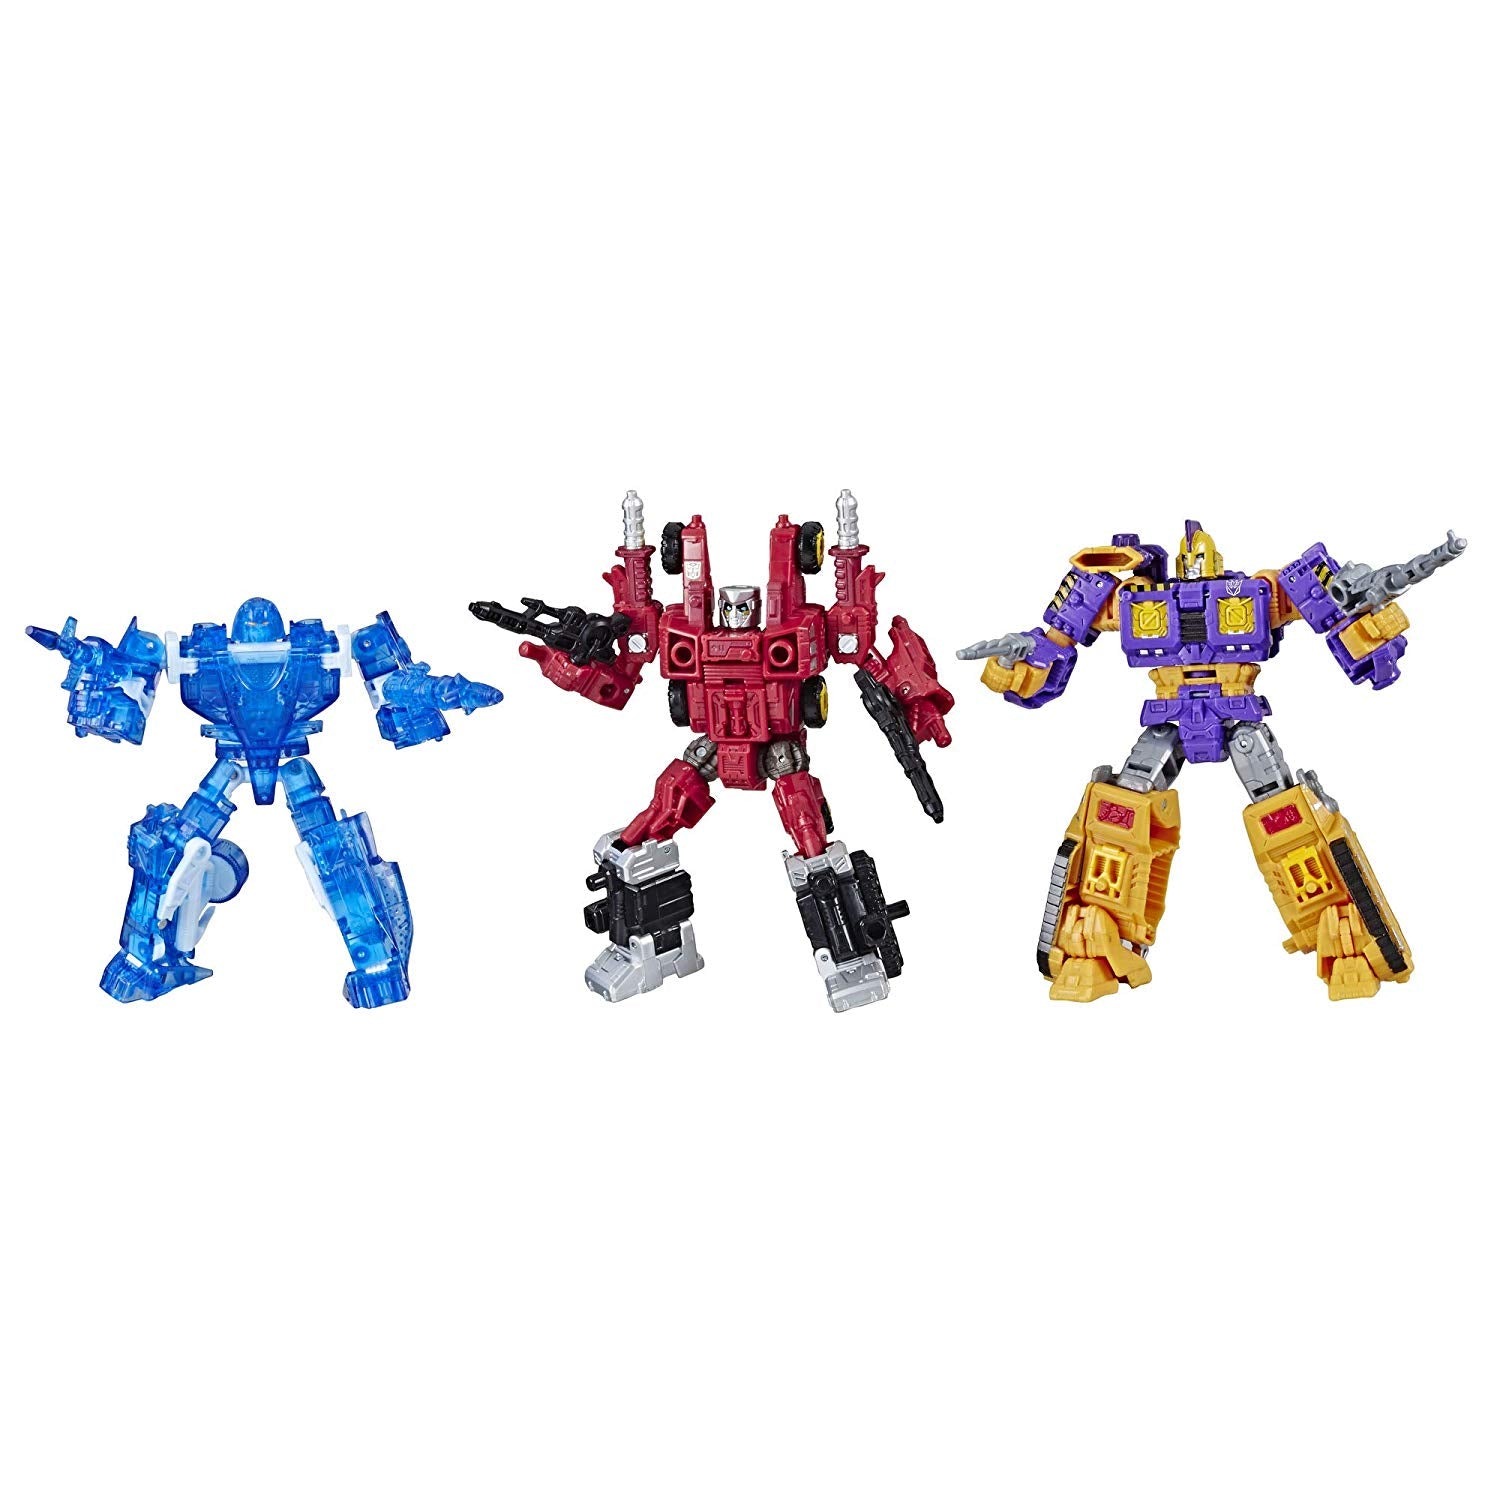 Transformers Generations War For Cybertron: Fan Vote Battle 3 Pack (Mirage, Aragon, Impactor) Action Figures Exclusive WFC-S55, S56, S57